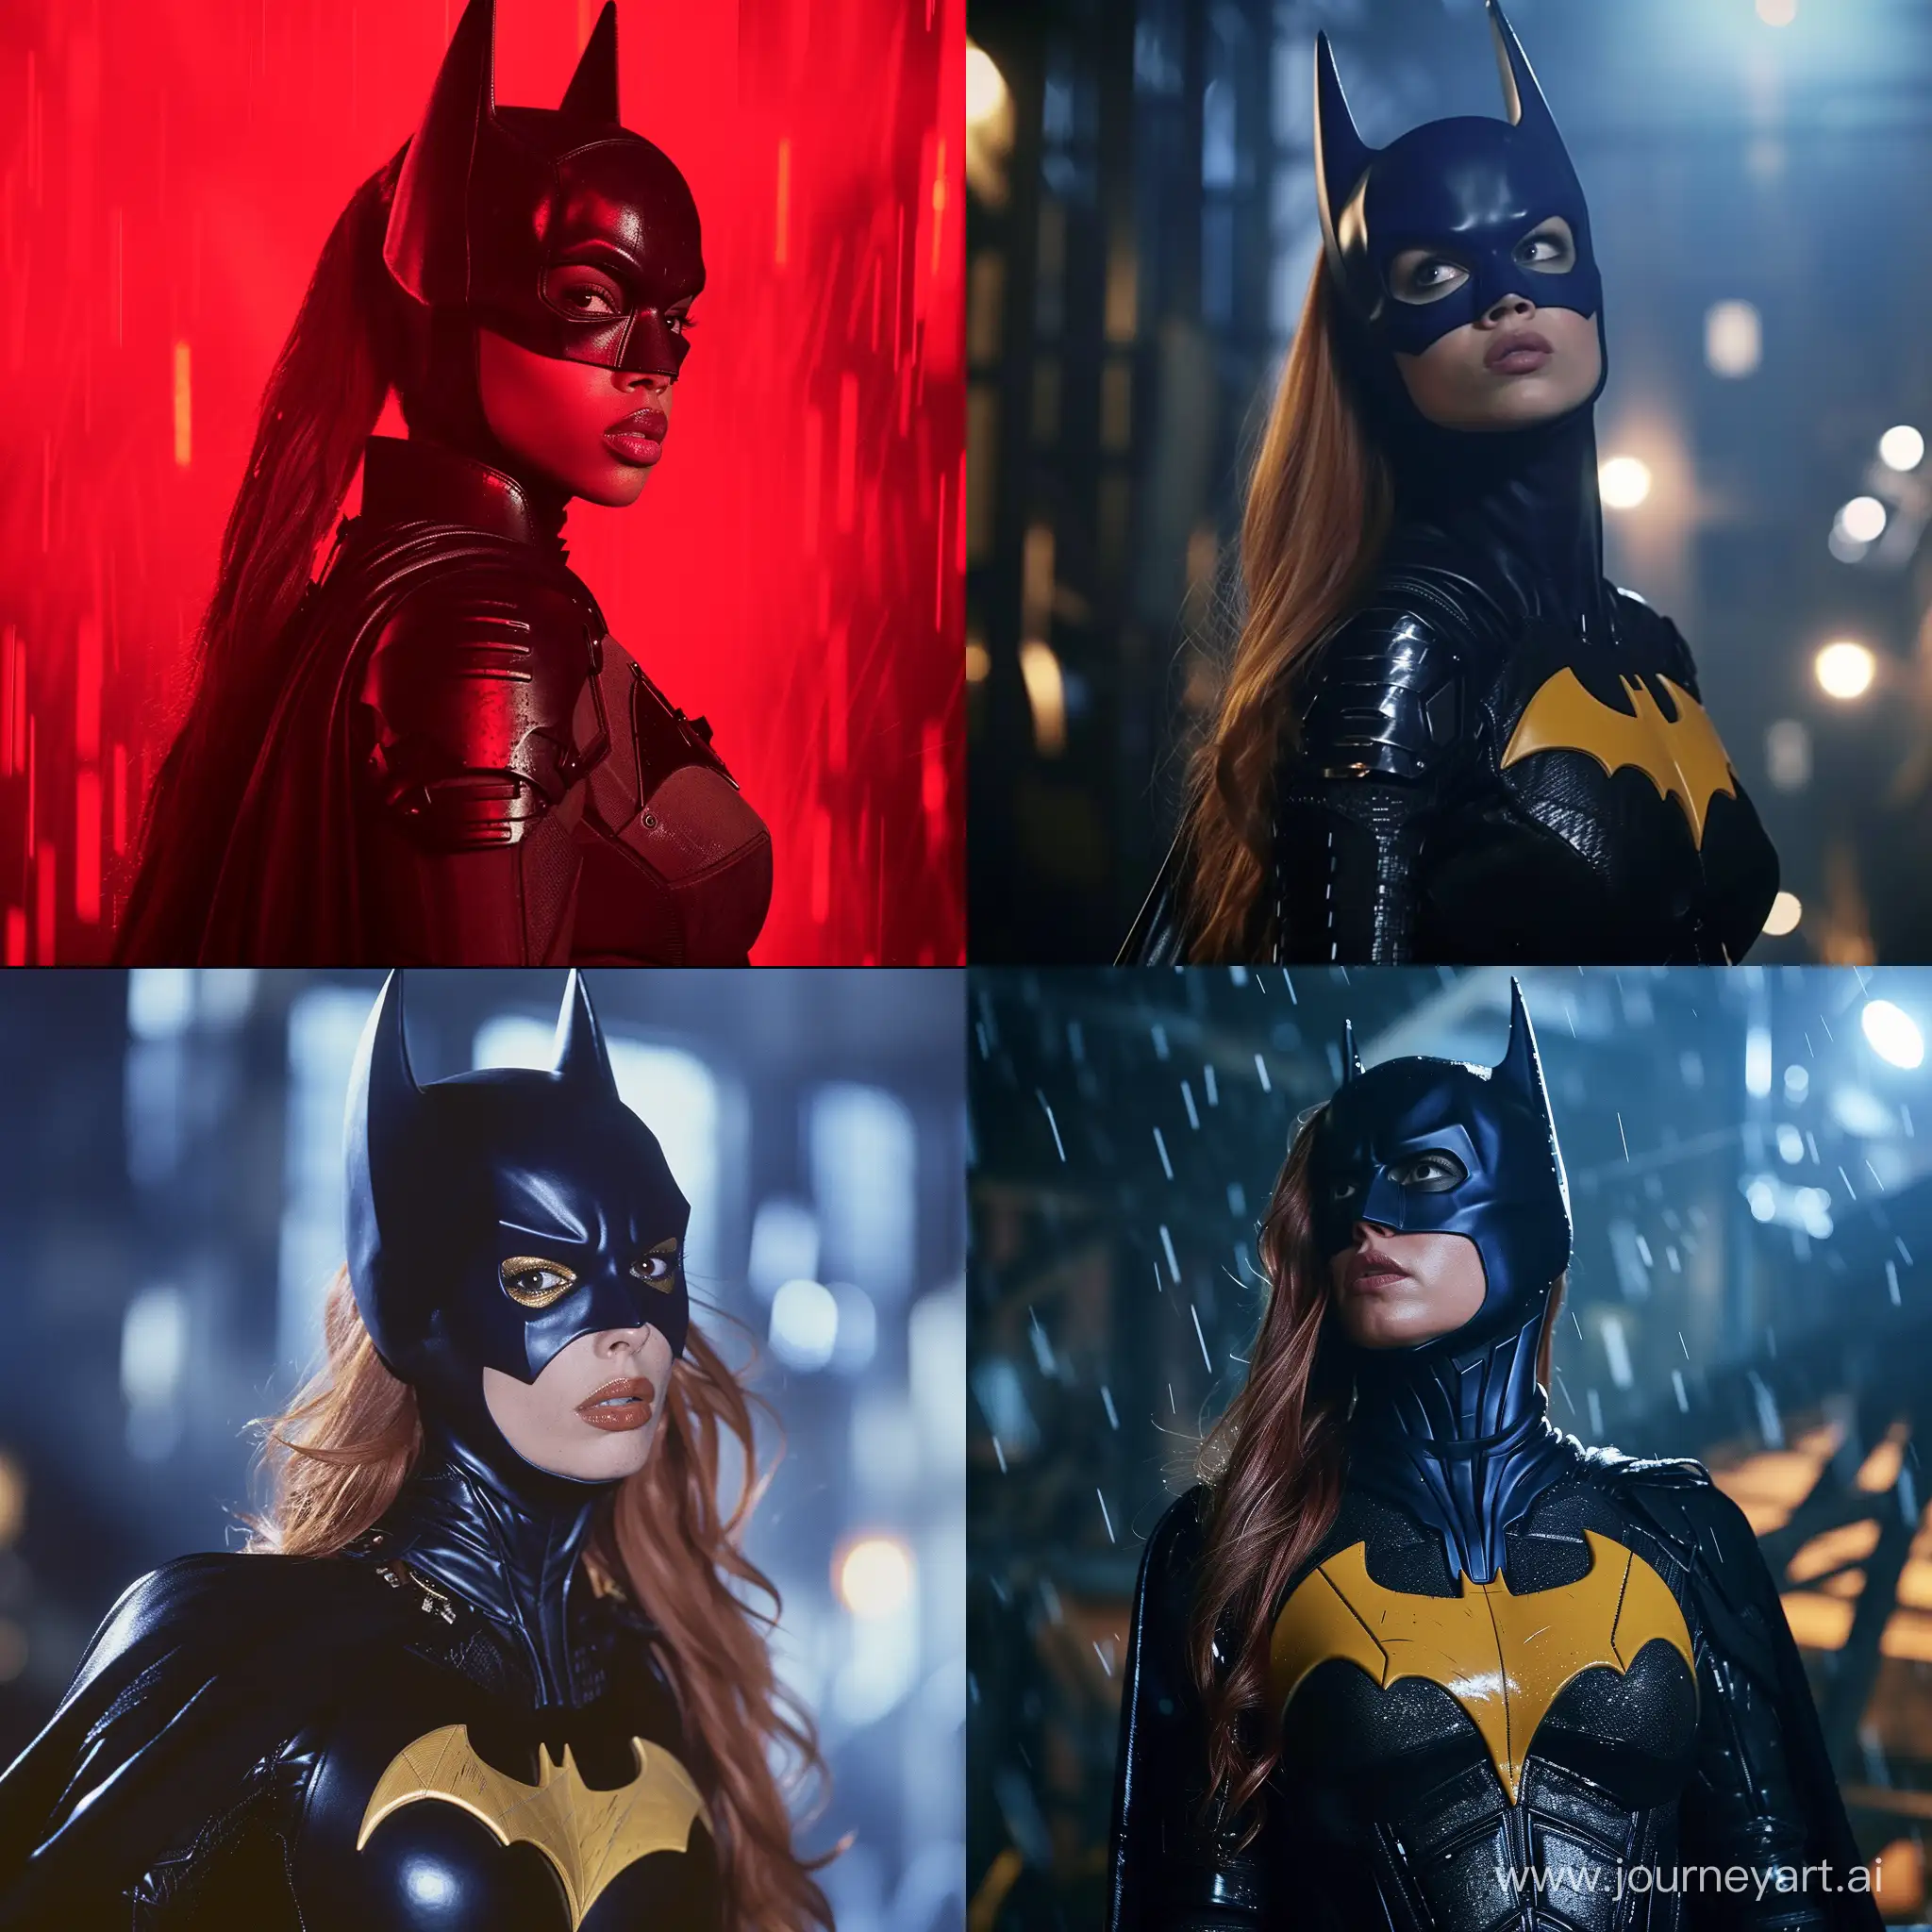 Erica Ash as Batgirl in movie 